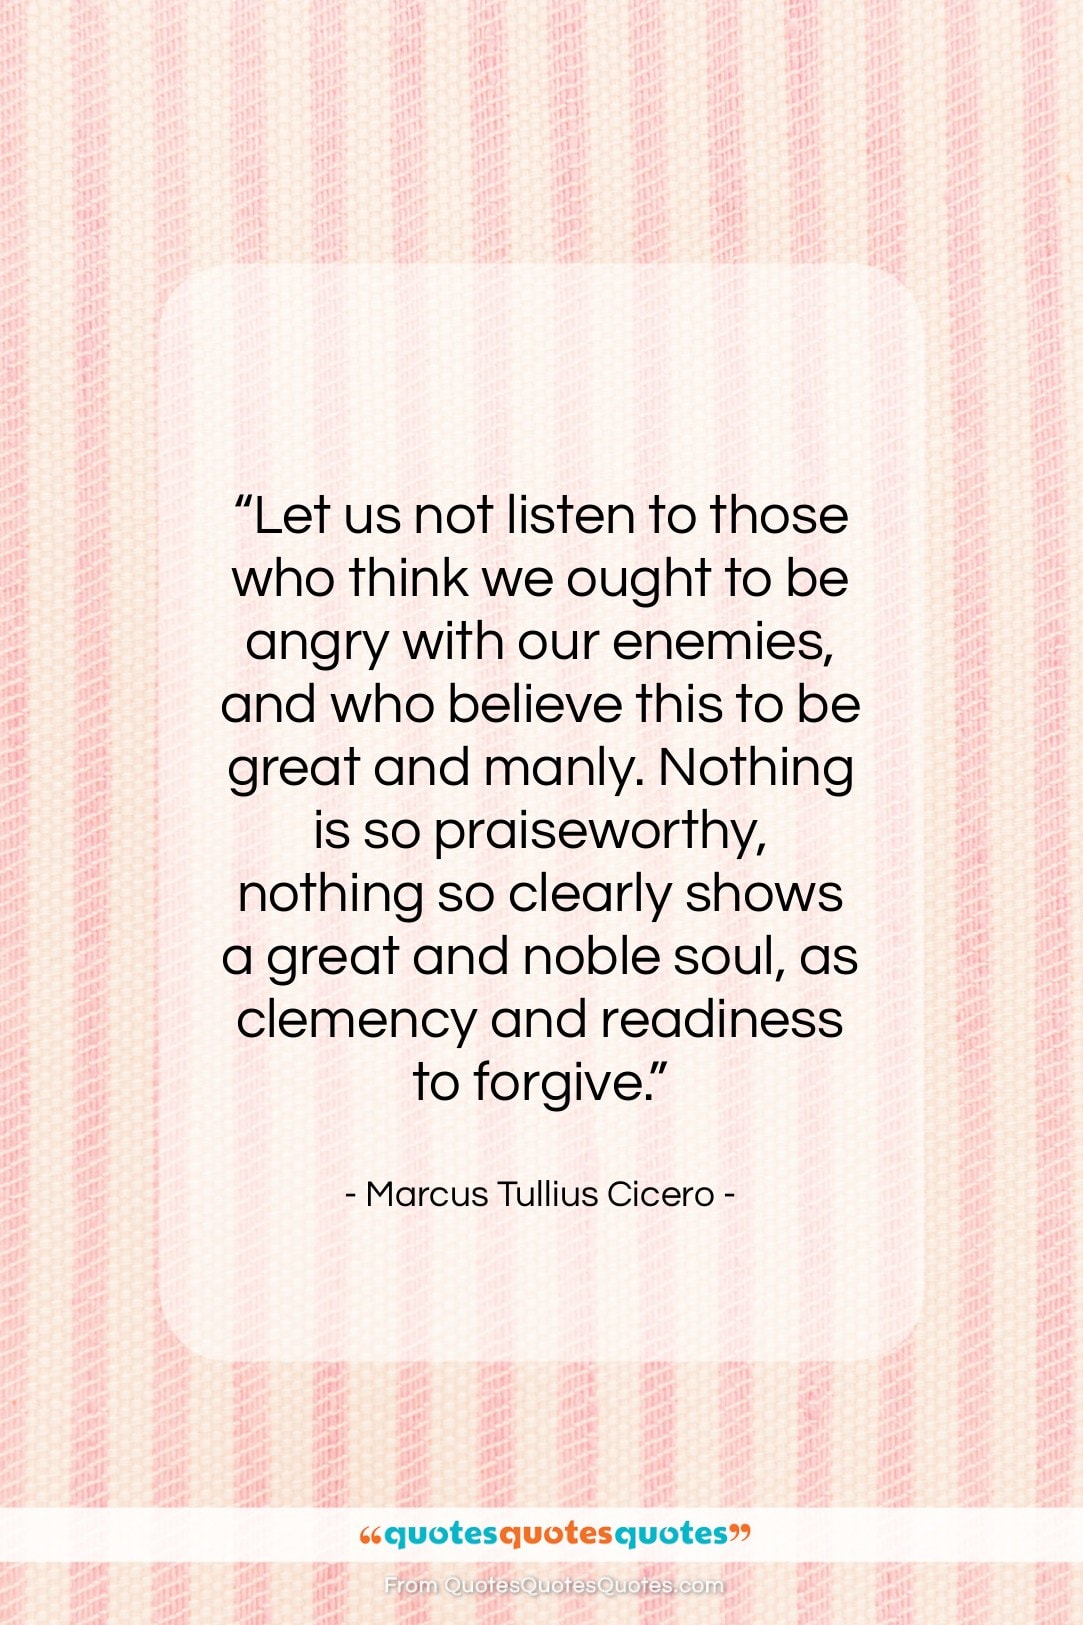 Marcus Tullius Cicero quote: “Let us not listen to those who…”- at QuotesQuotesQuotes.com